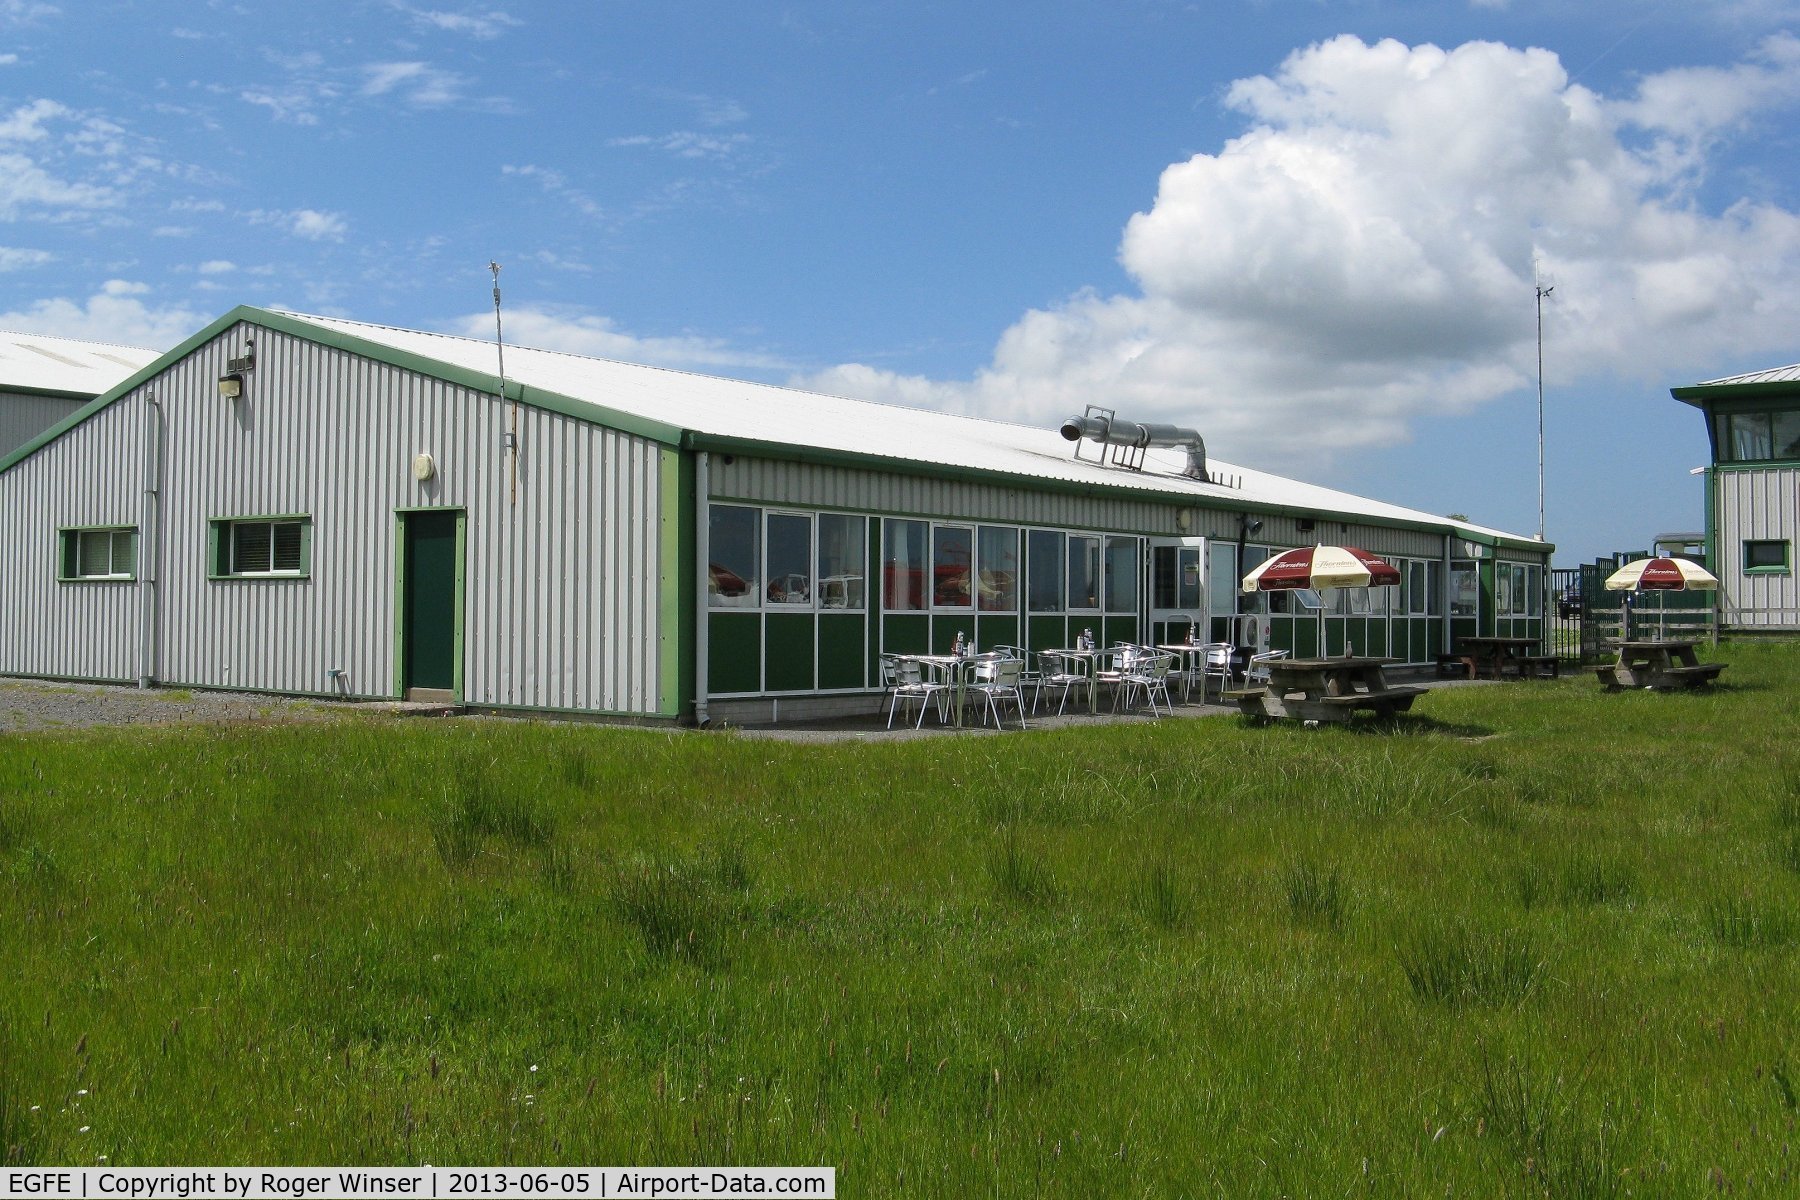 Haverfordwest Aerodrome Airport, Haverfordwest, Wales United Kingdom (EGFE) - The Propeller Cafe and Flight Offices at Haverfordwest Airport..